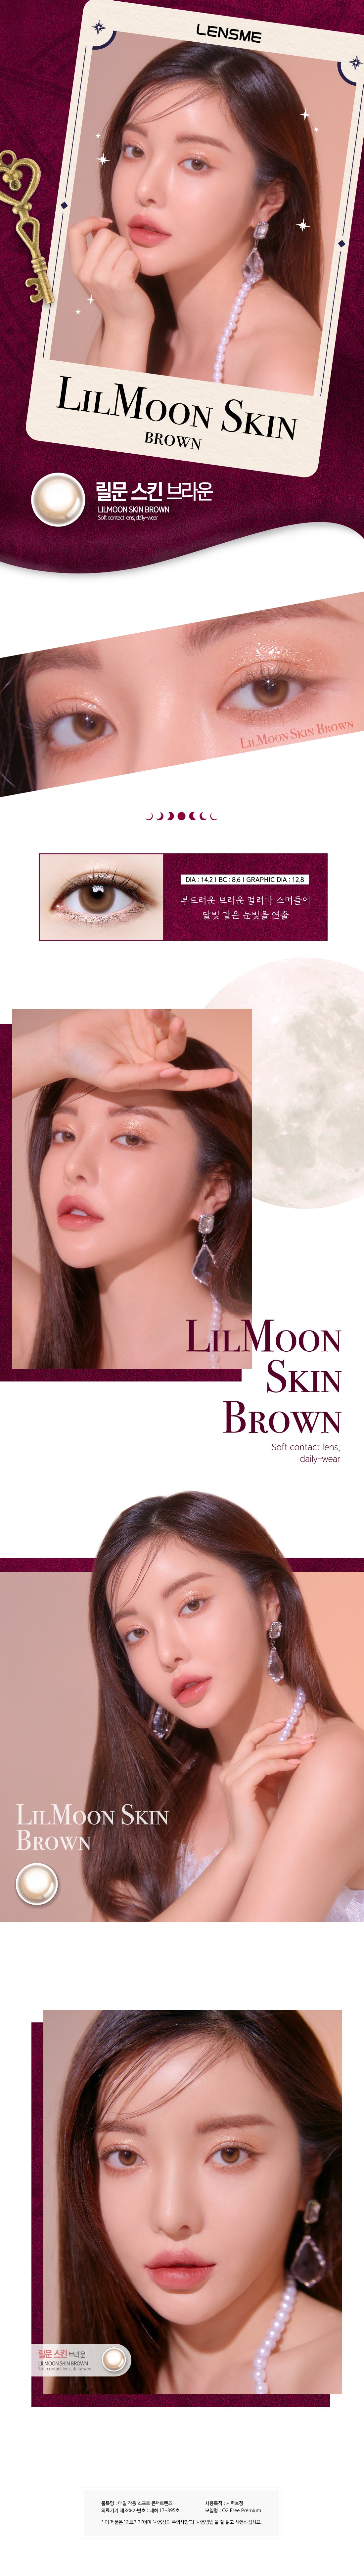 LensMe Lil Moon Skin Brown | 1 Month